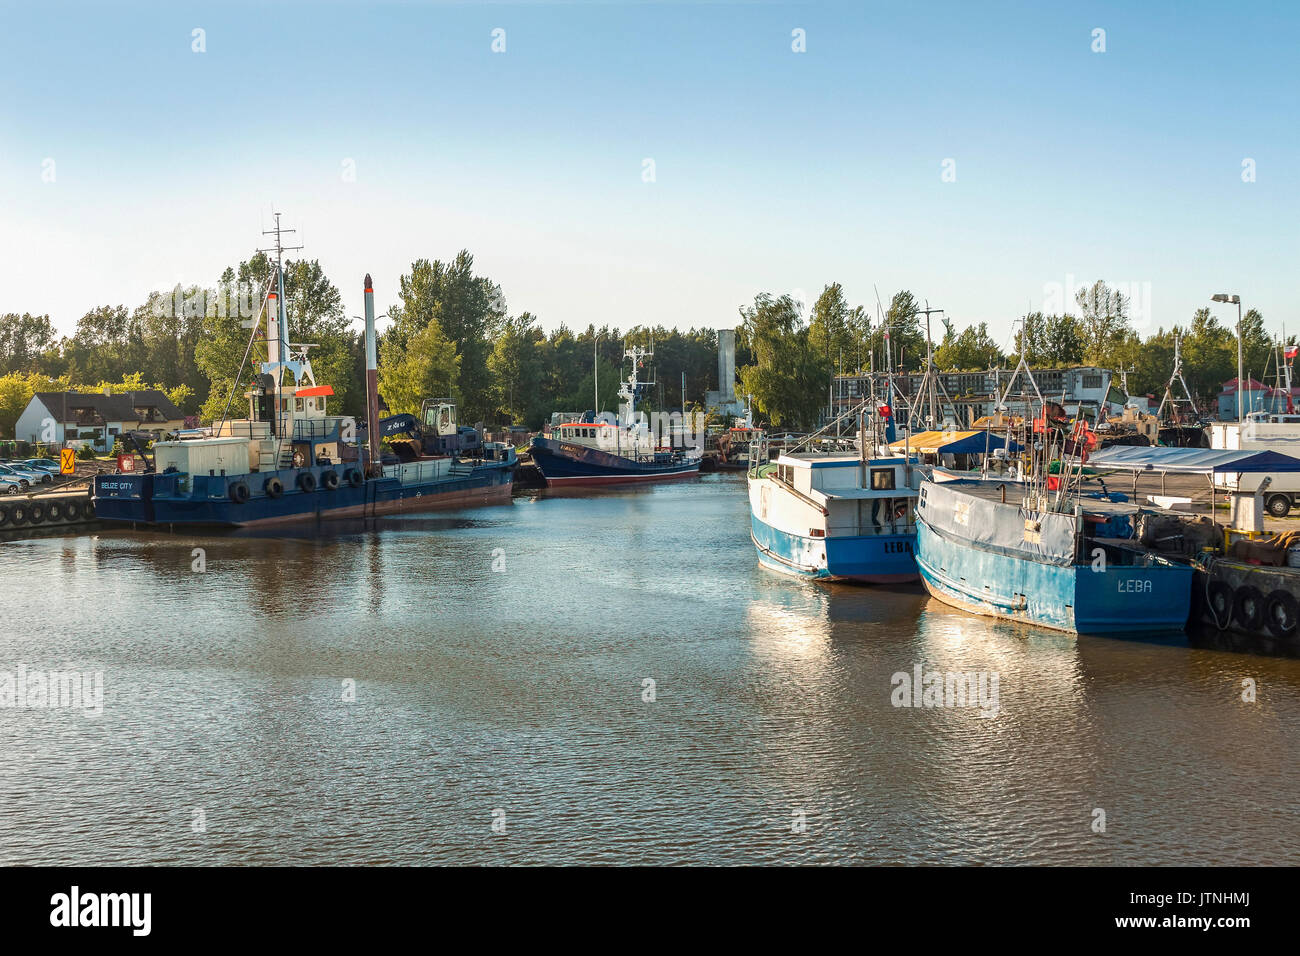 Fishing boats in Leba river port, Leba, Poland Stock Photo